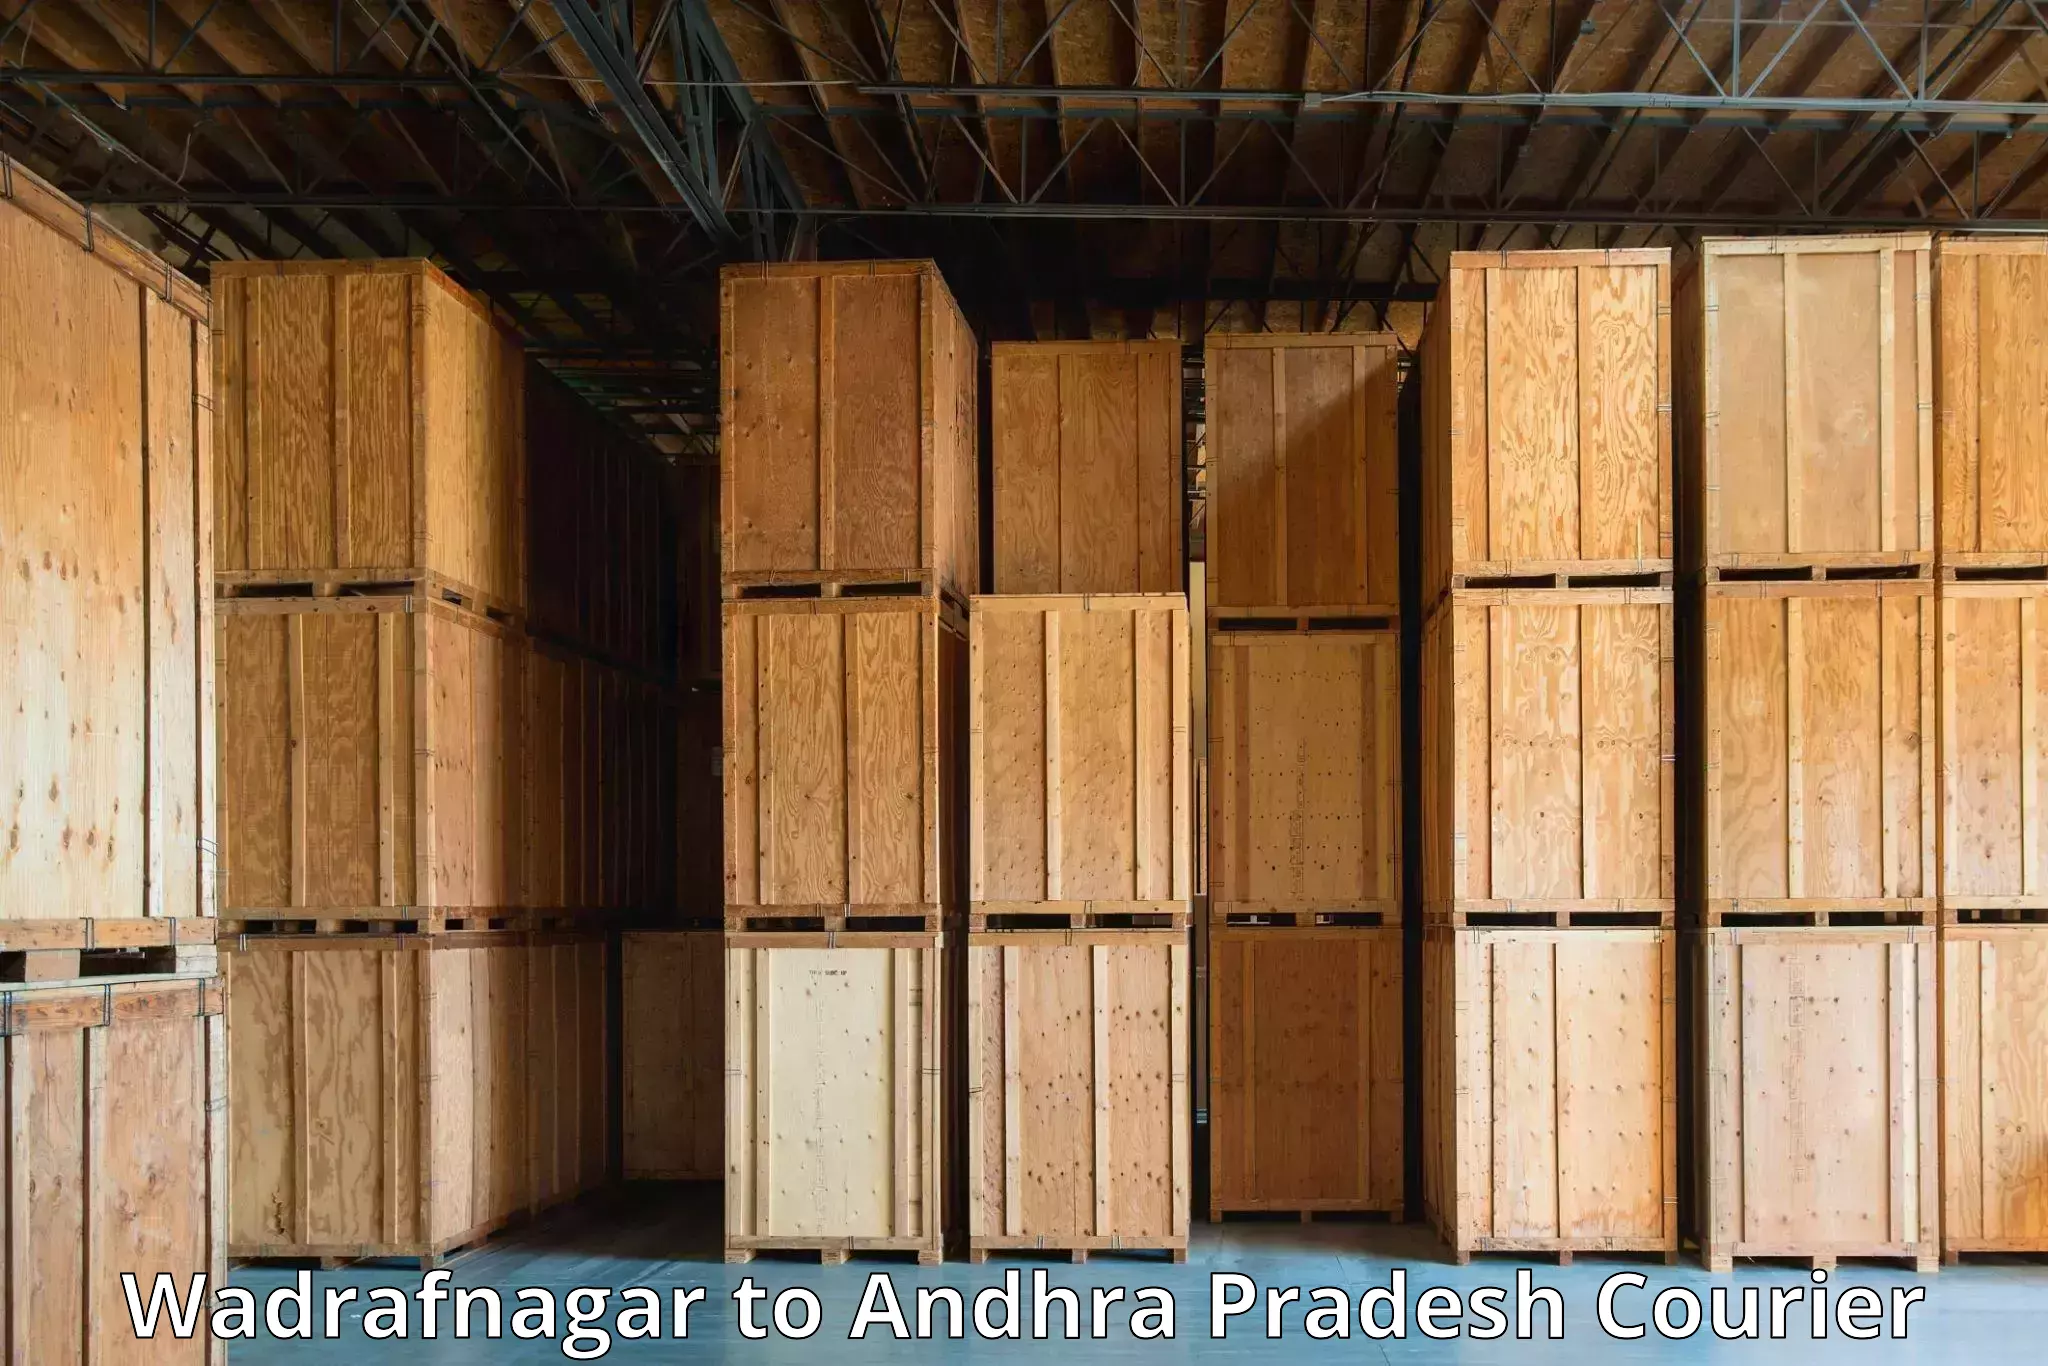 Sustainable shipping practices Wadrafnagar to East Godavari